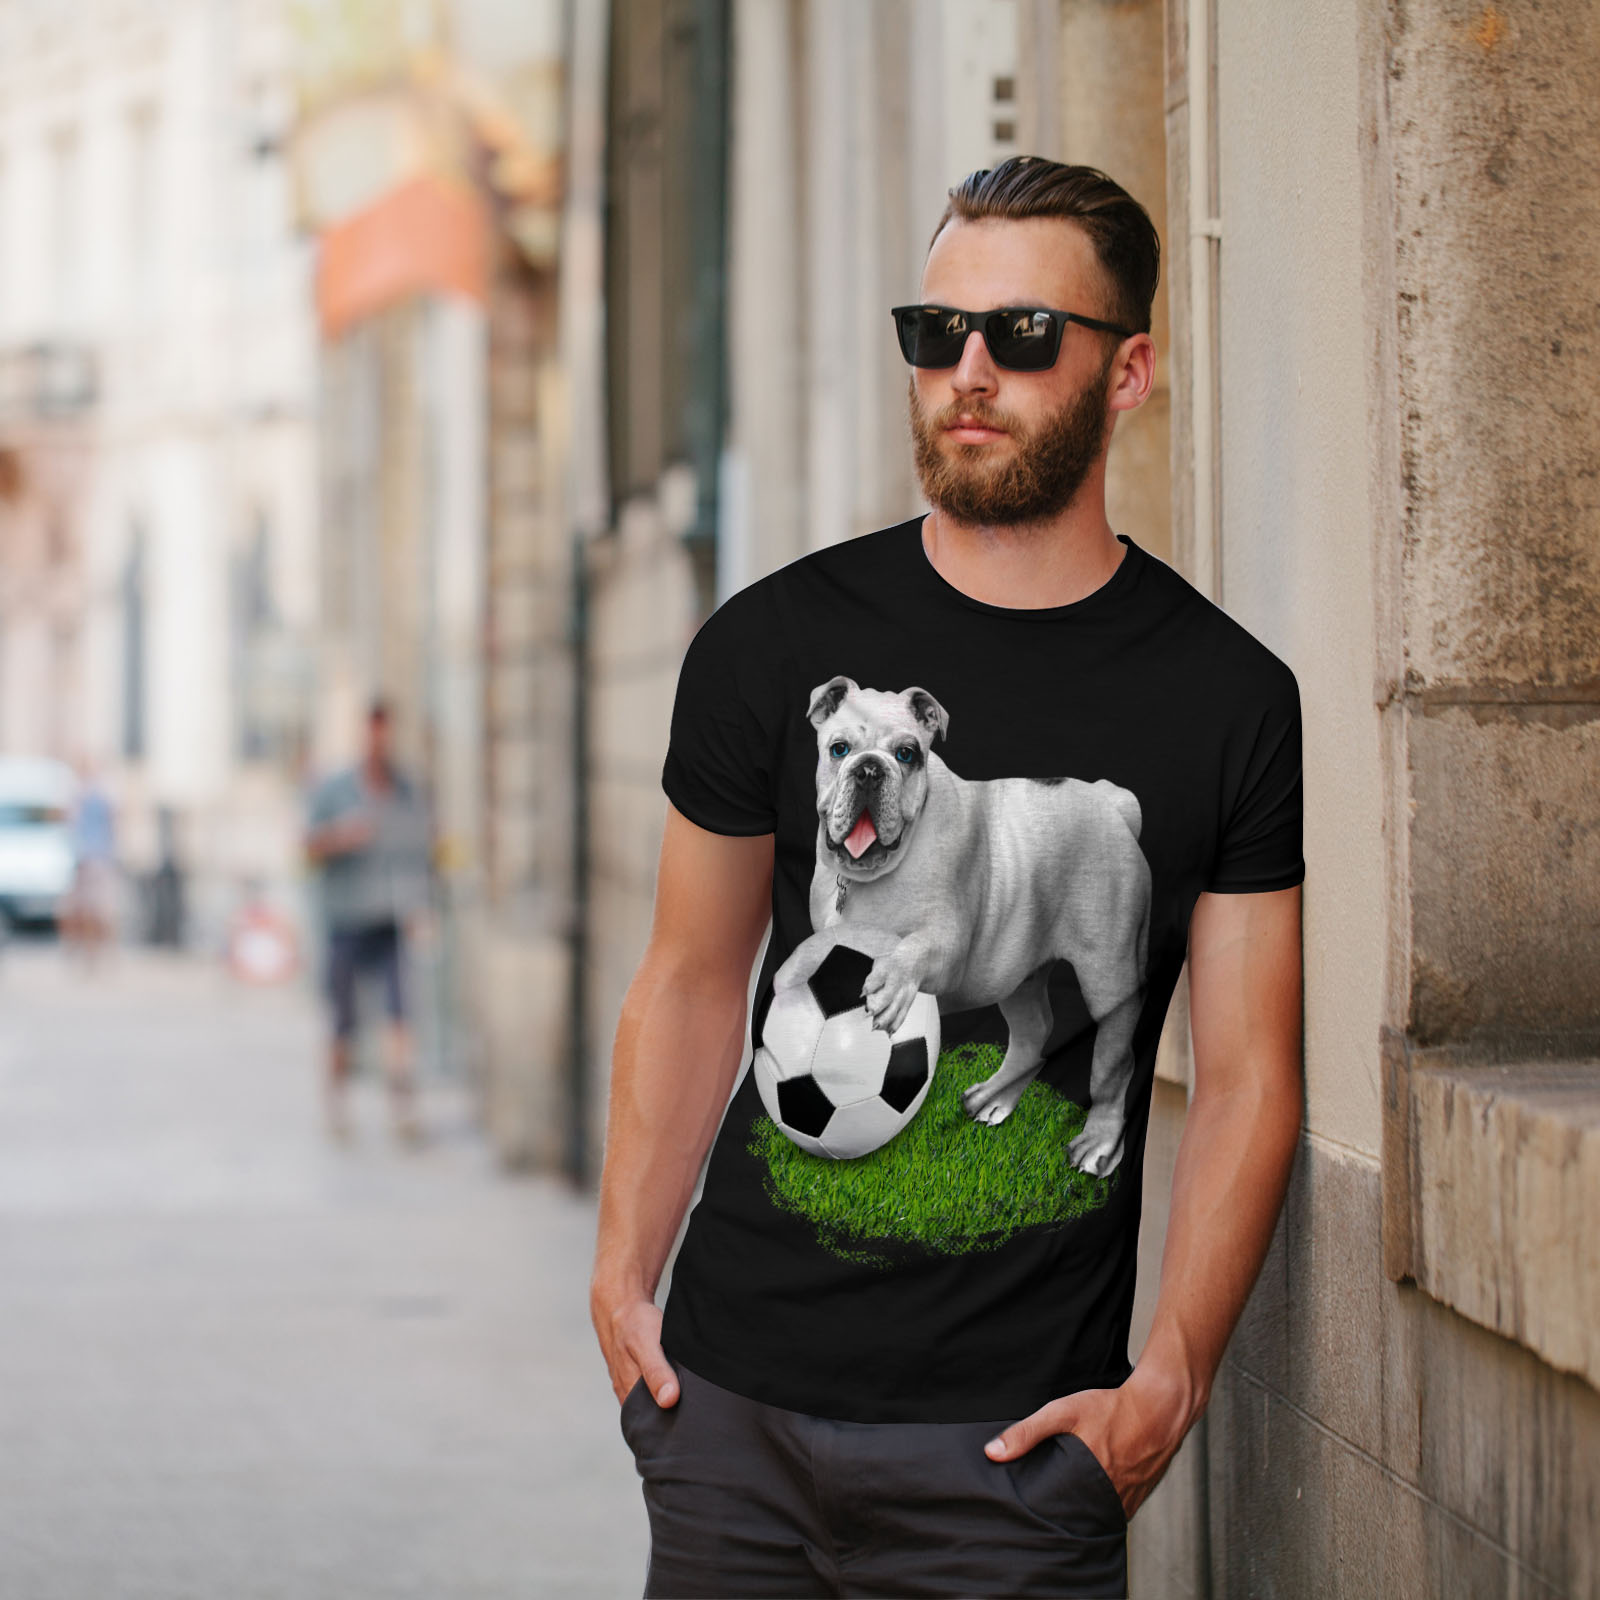 Wellcoda Juego De Fútbol Deporte Hombre Bola Camiseta Diseño gráfico impreso camiseta